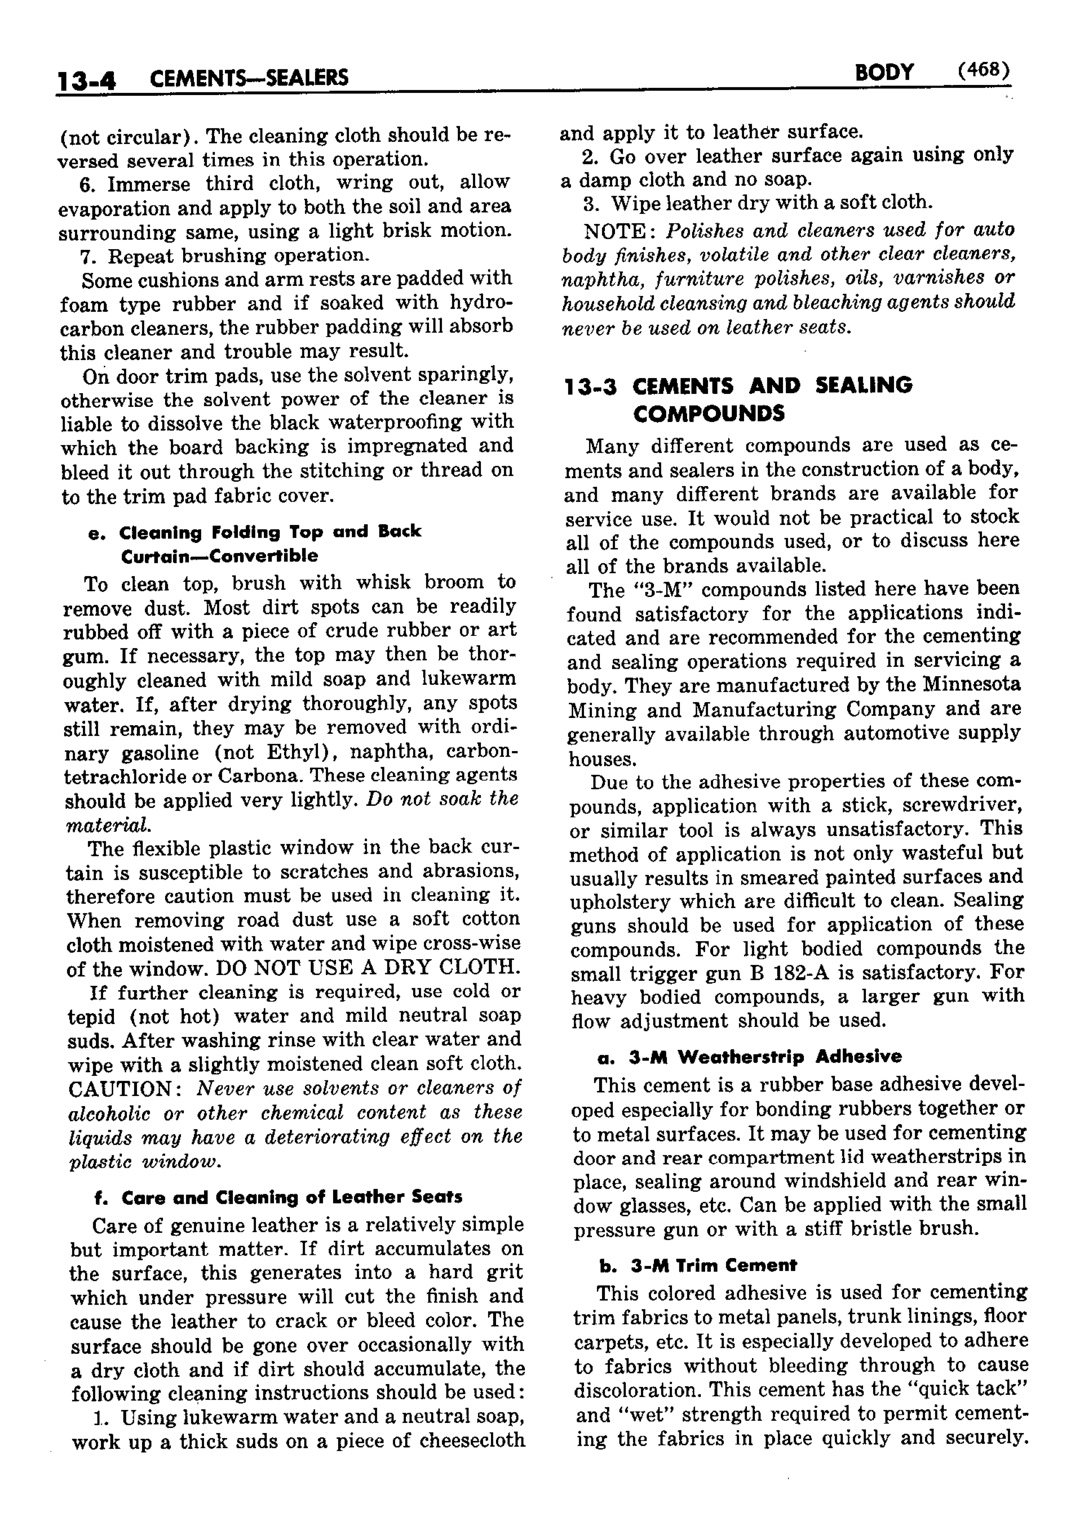 n_14 1952 Buick Shop Manual - Body-004-004.jpg